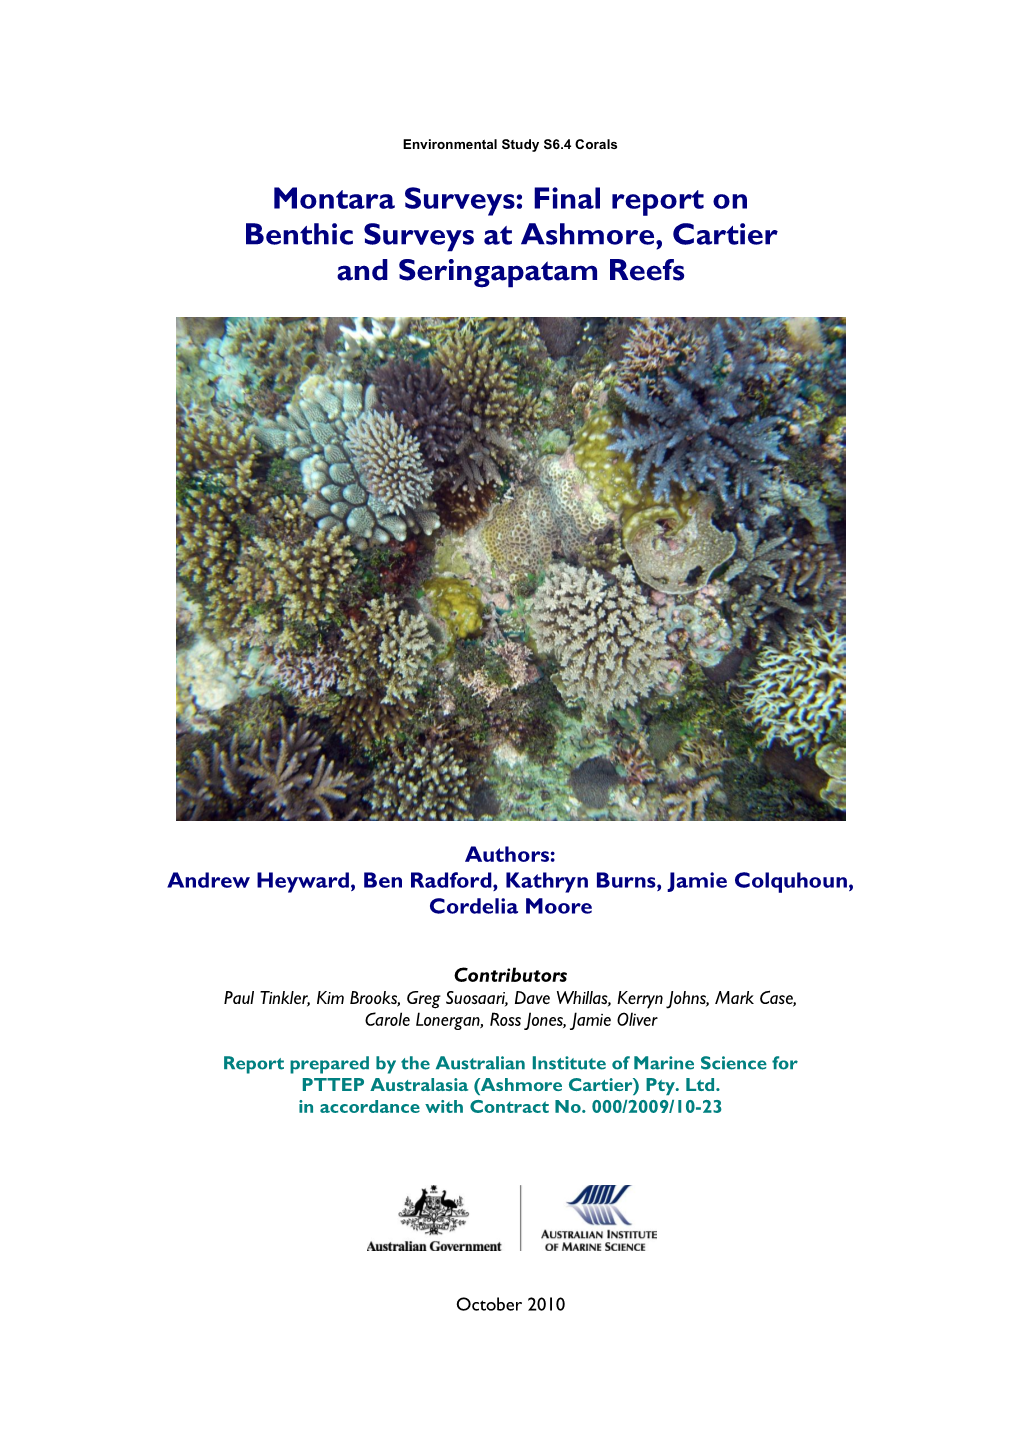 Montara Surveys: Final Report on Benthic Surveys at Ashmore, Cartier and Seringapatam Reefs